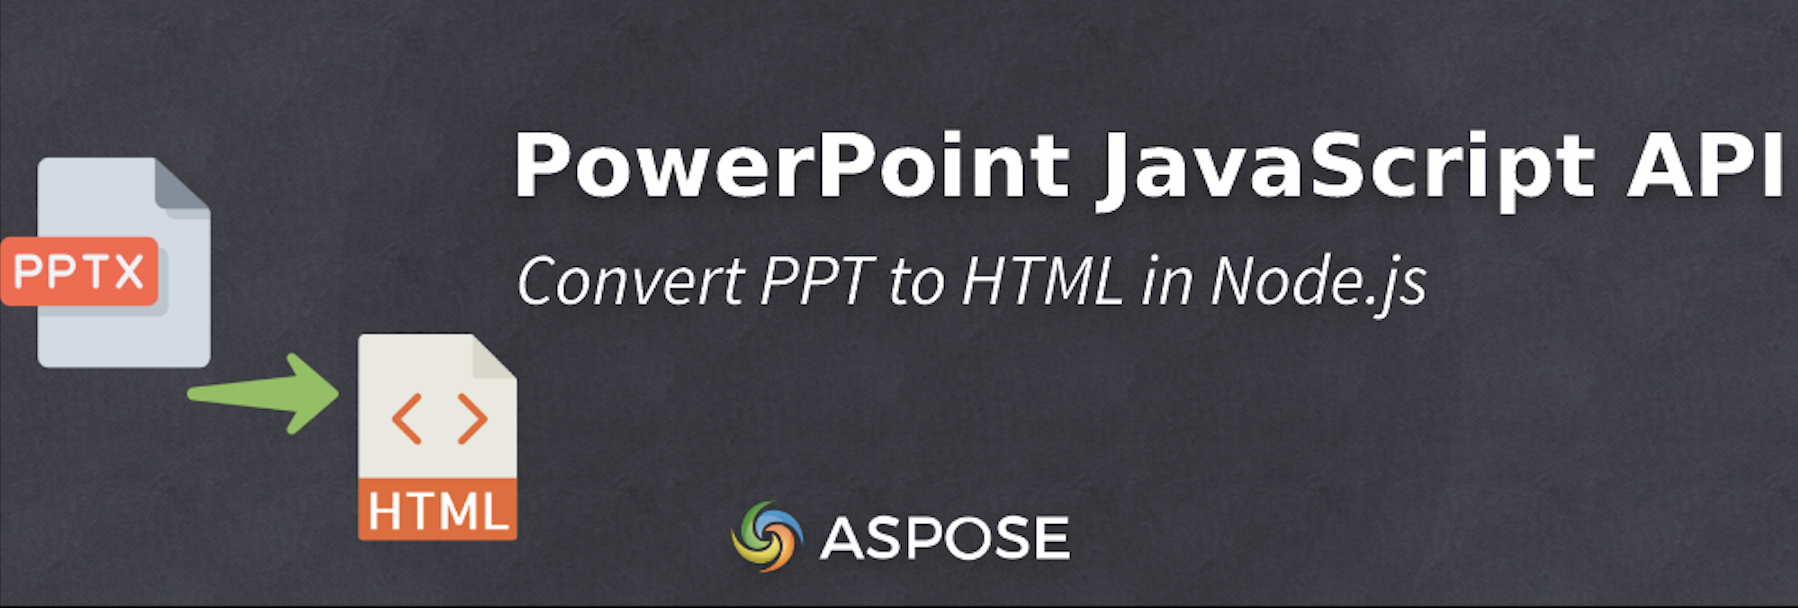 在 Node.js 中將 PPT 轉換為 HTML - PowerPoint JavaScript API